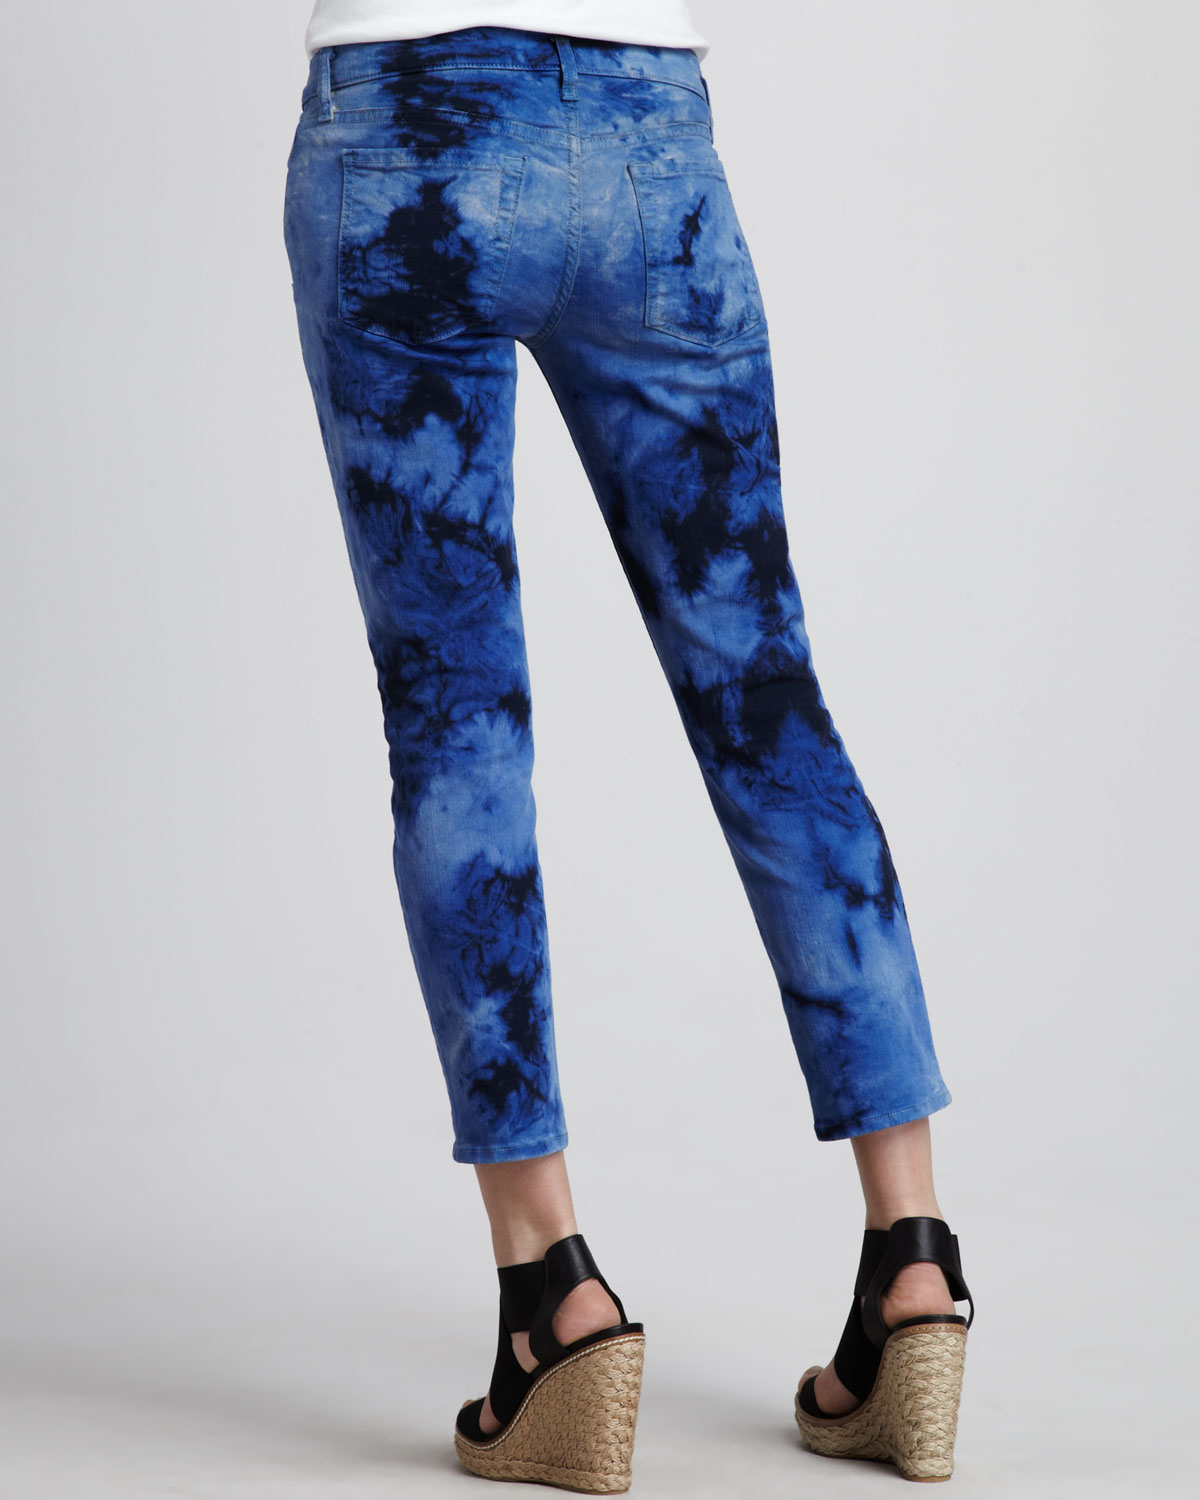 Lyst - 7 For All Mankind Roxanne Cropped Jeans Tie Dye in Blue